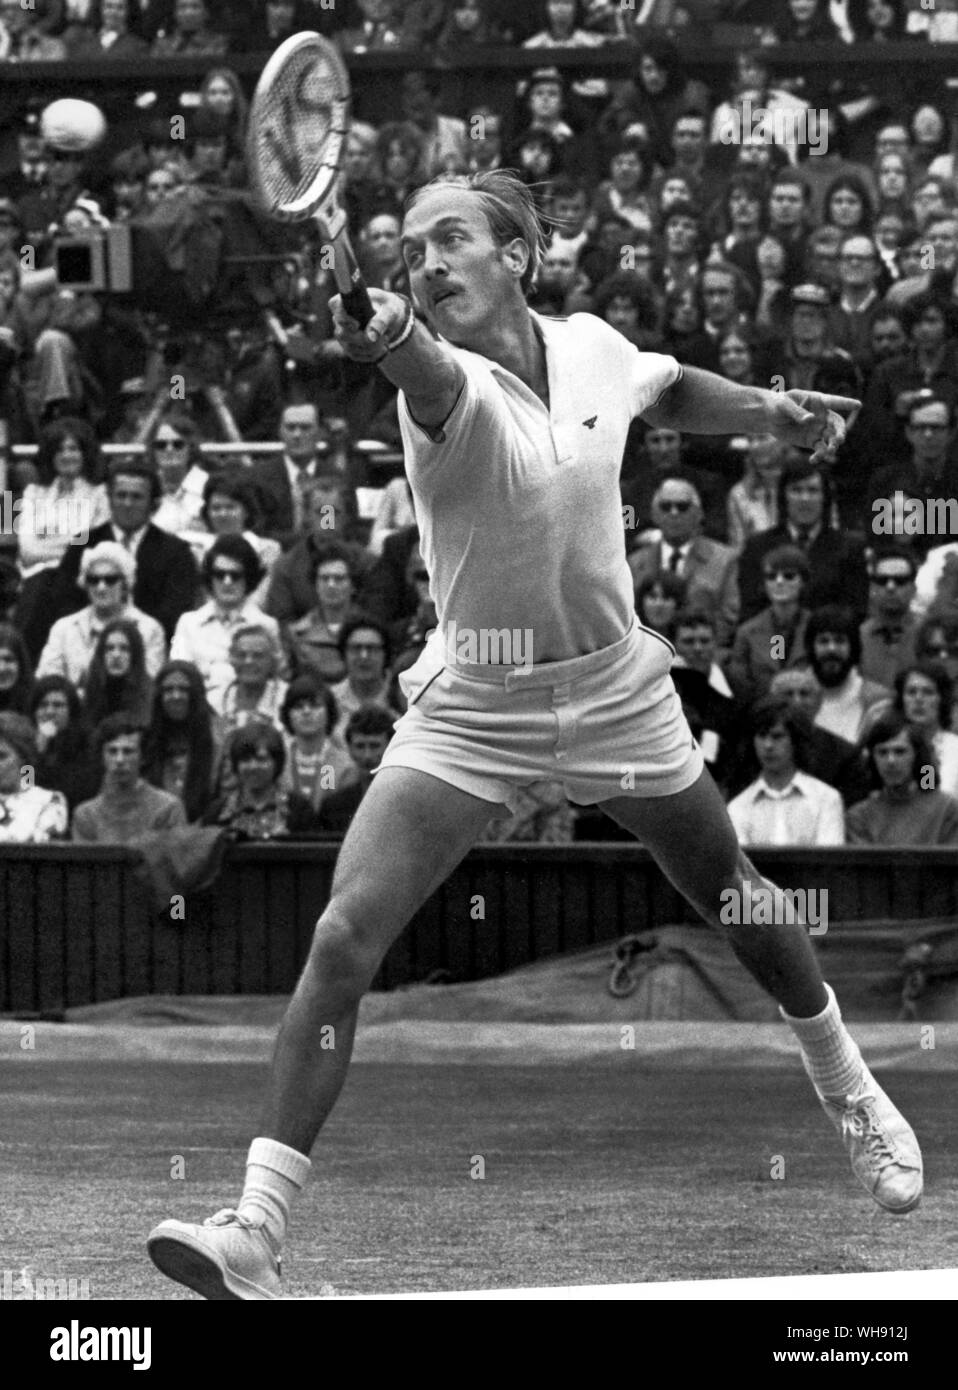 vaak Symposium Onderdrukker USA's, Stan Smith who defeated Ile Nastase in the Wimbledon final of 1971  Stock Photo - Alamy